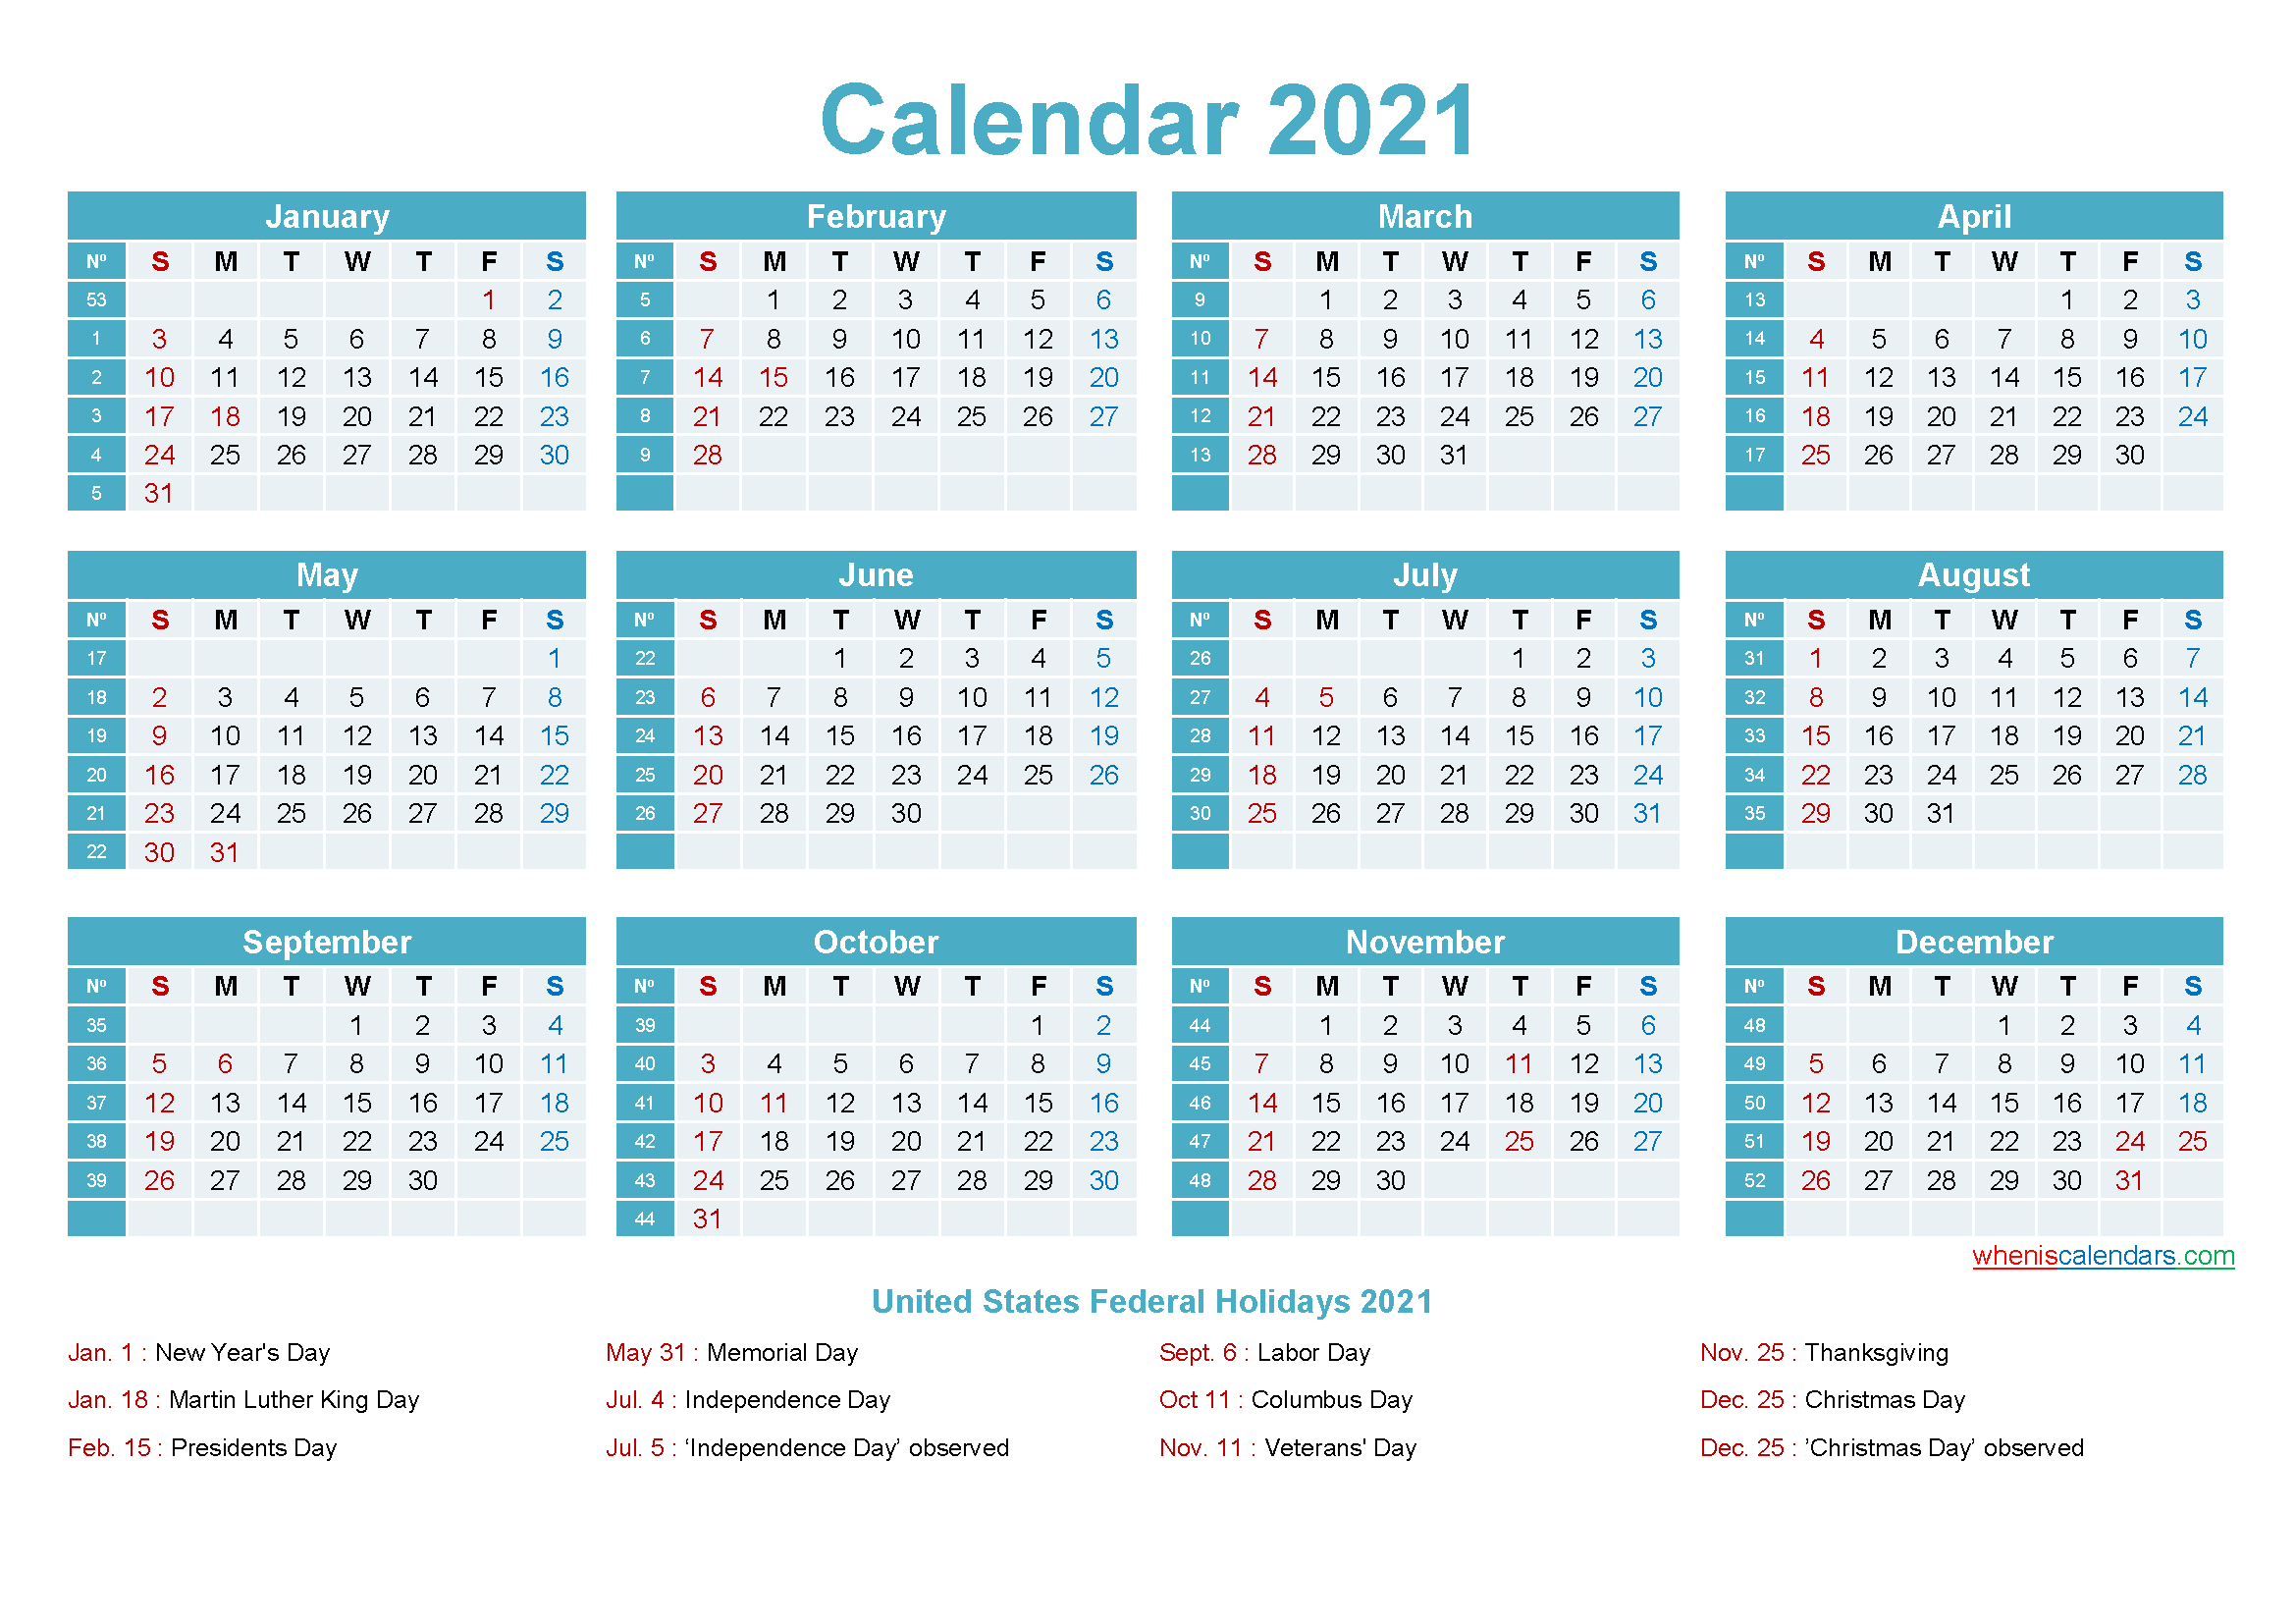 Calendar 2021 Template You Can Type In | Calendar ...